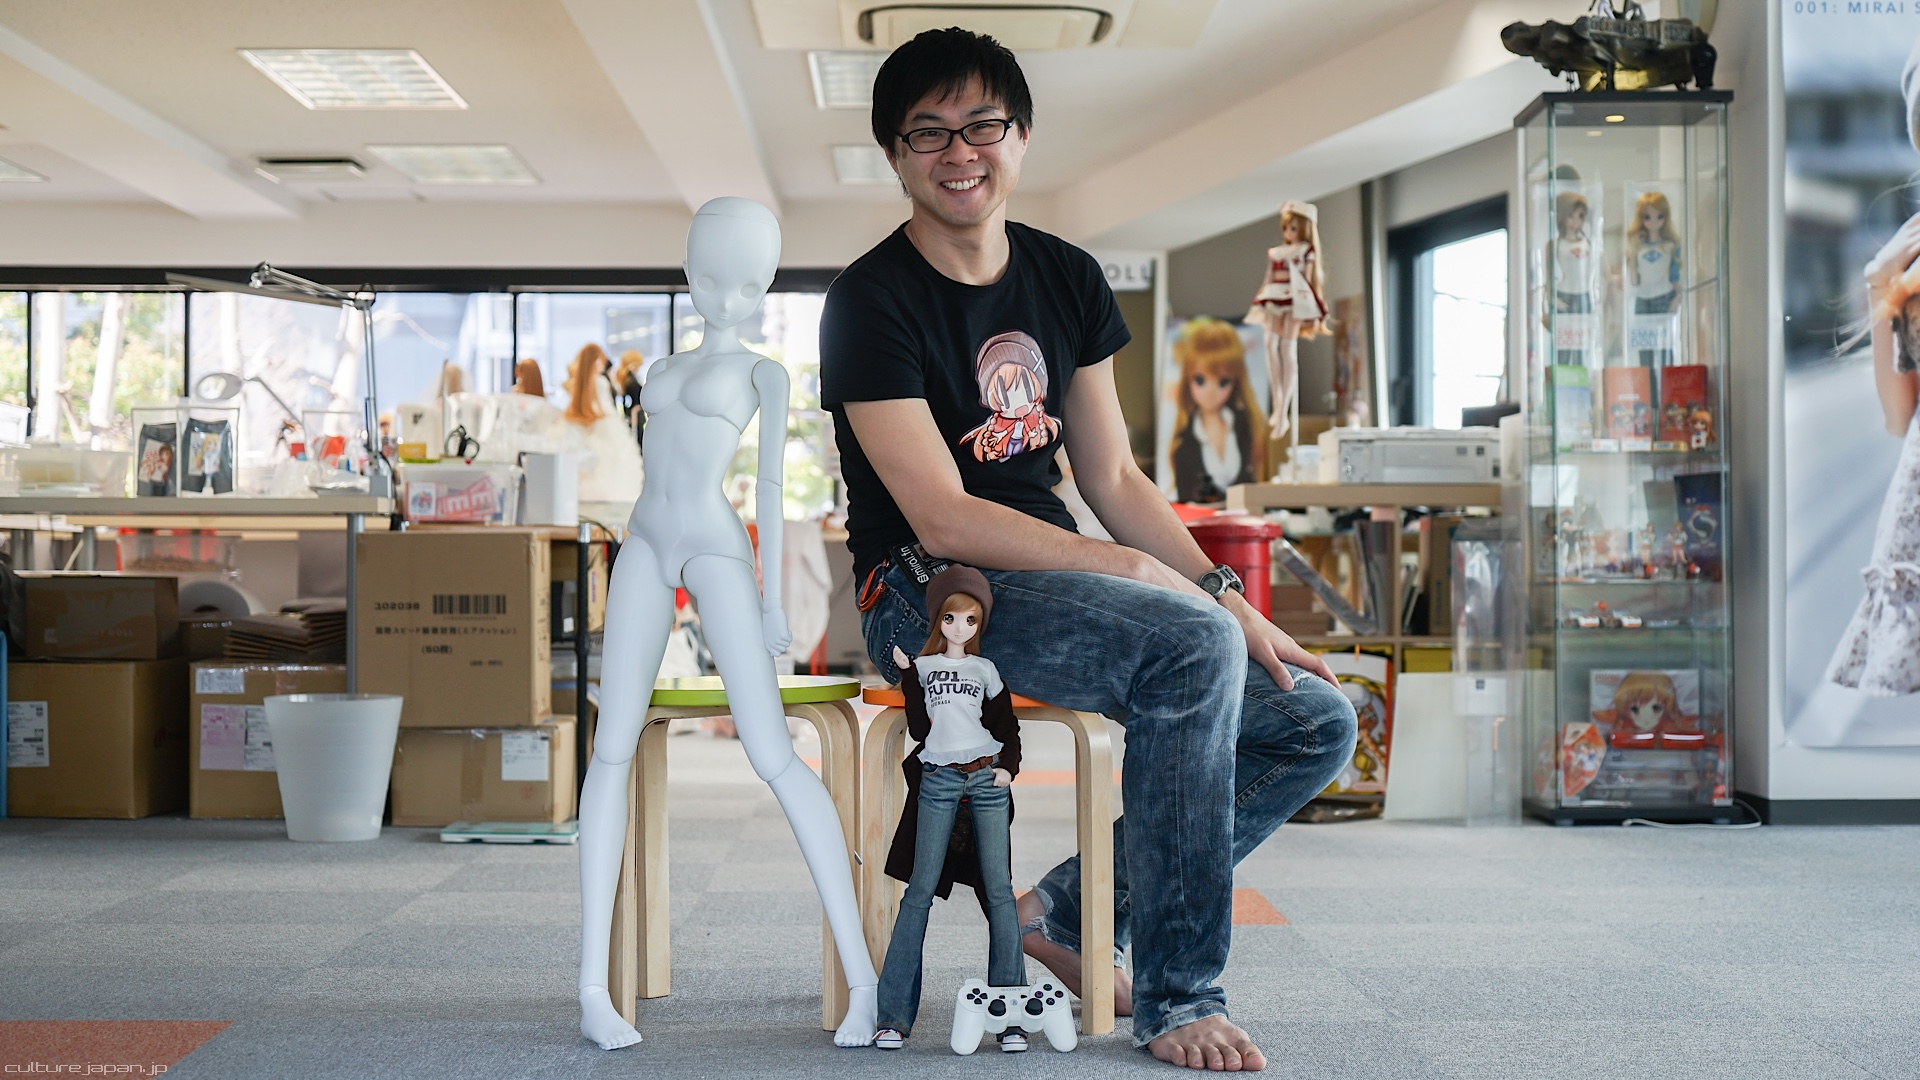 DannyChoo Unveils the Next Evolution in 3D Printed Robotic Dolls